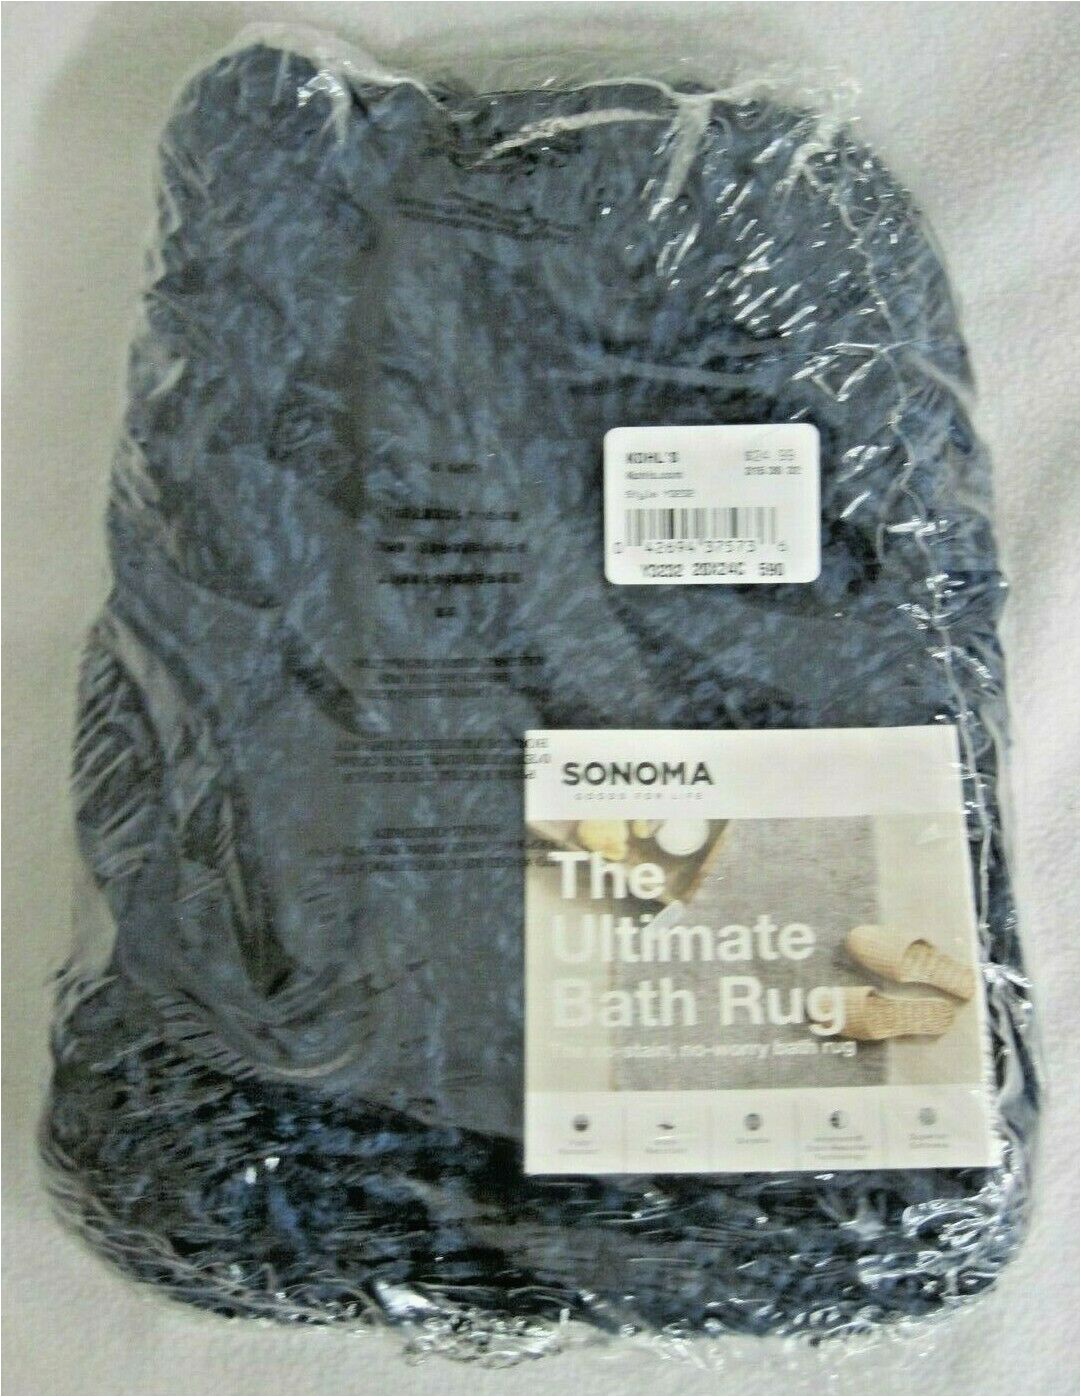 Reversible Contour Bath Rug Nip sonoma Goods for Life Ultimate Contour Bath Rug 20" X 24" Blue